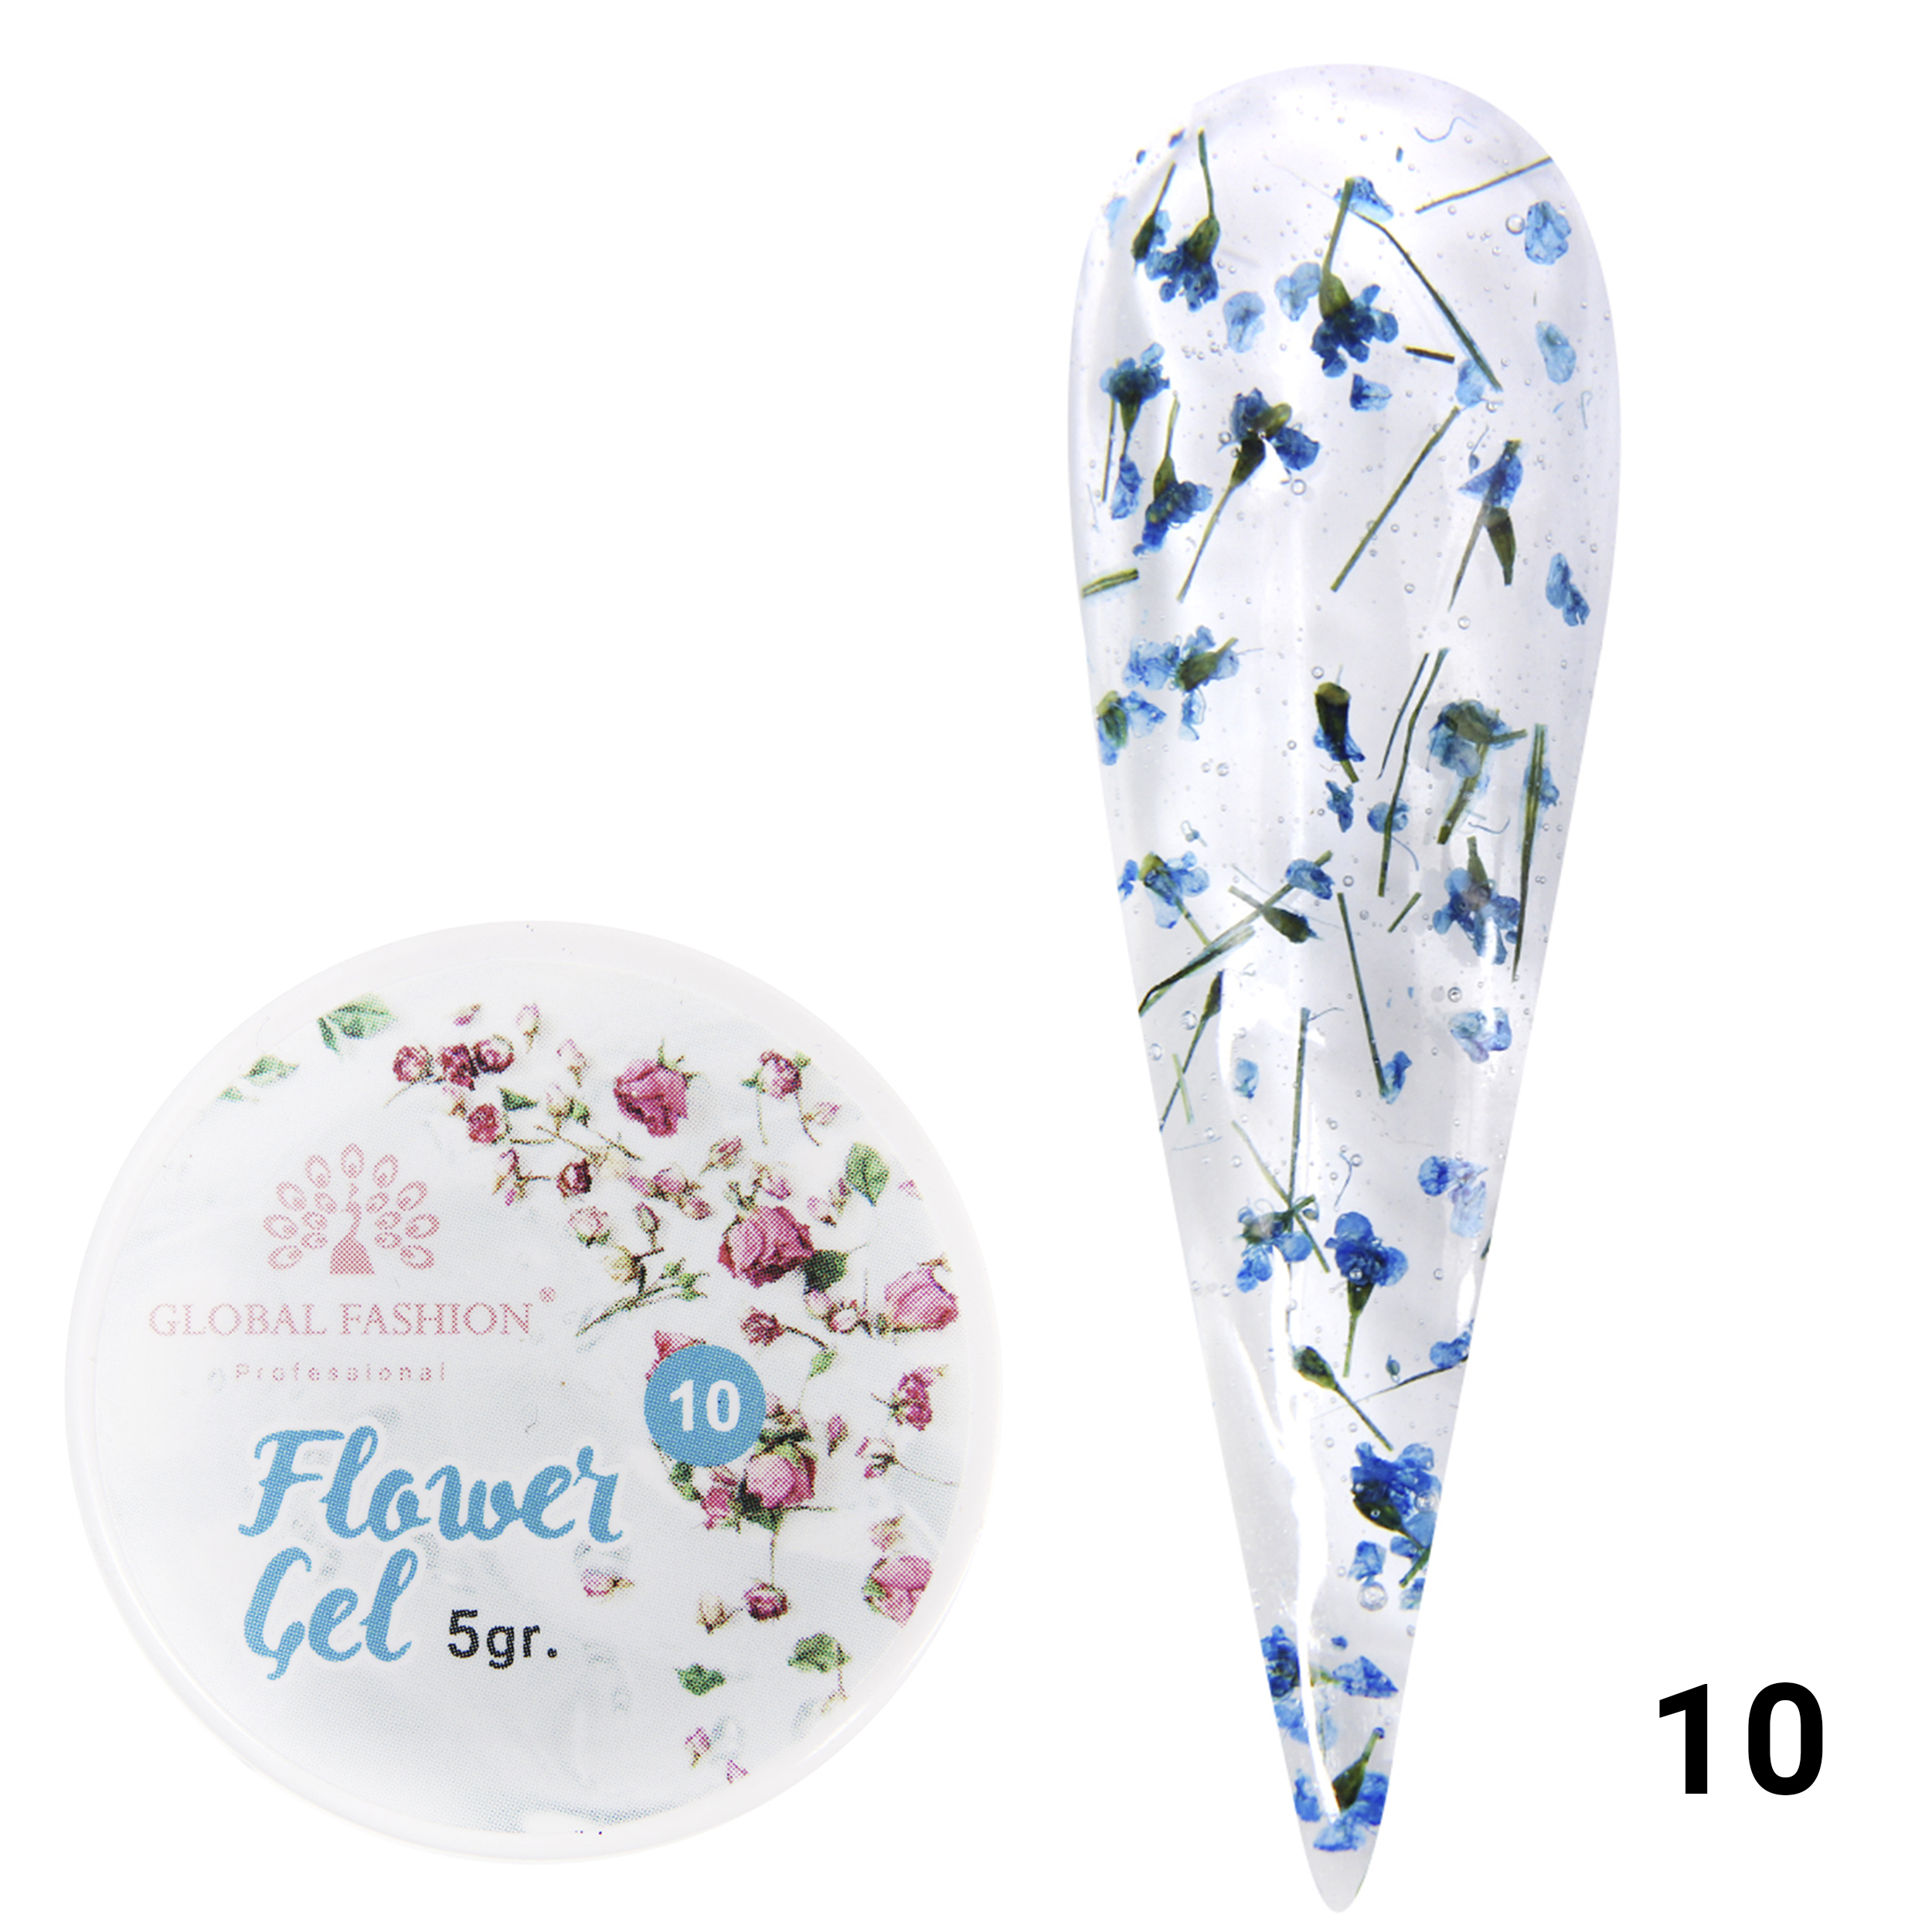 Гель с сухоцветами Global Fashion 5 г, Flower Gel 10